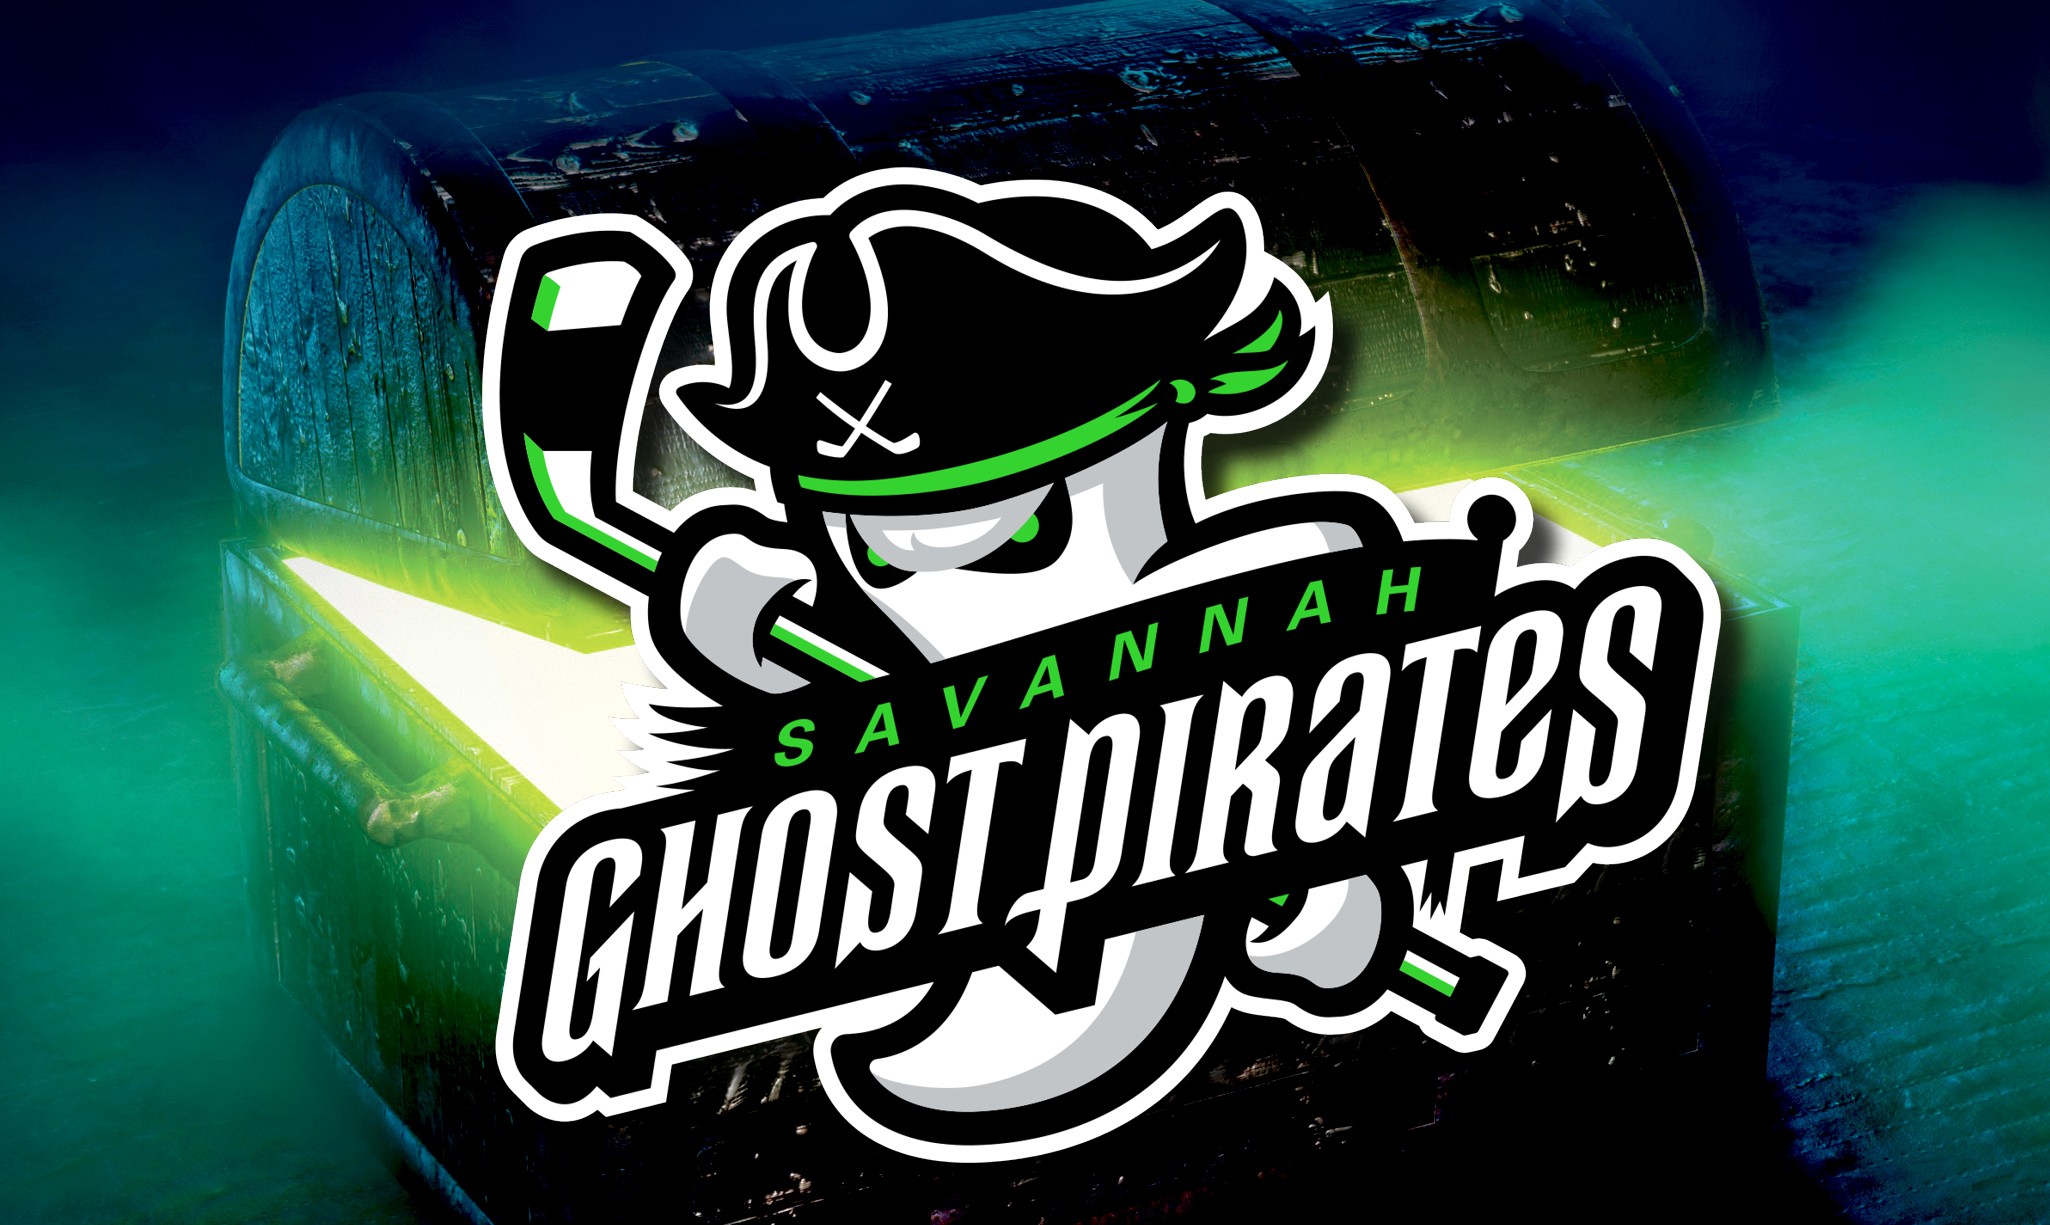 GHOST PIRATES: Savannah's new hockey team announces new name and logo, Community, Savannah News, Events, Restaurants, Music